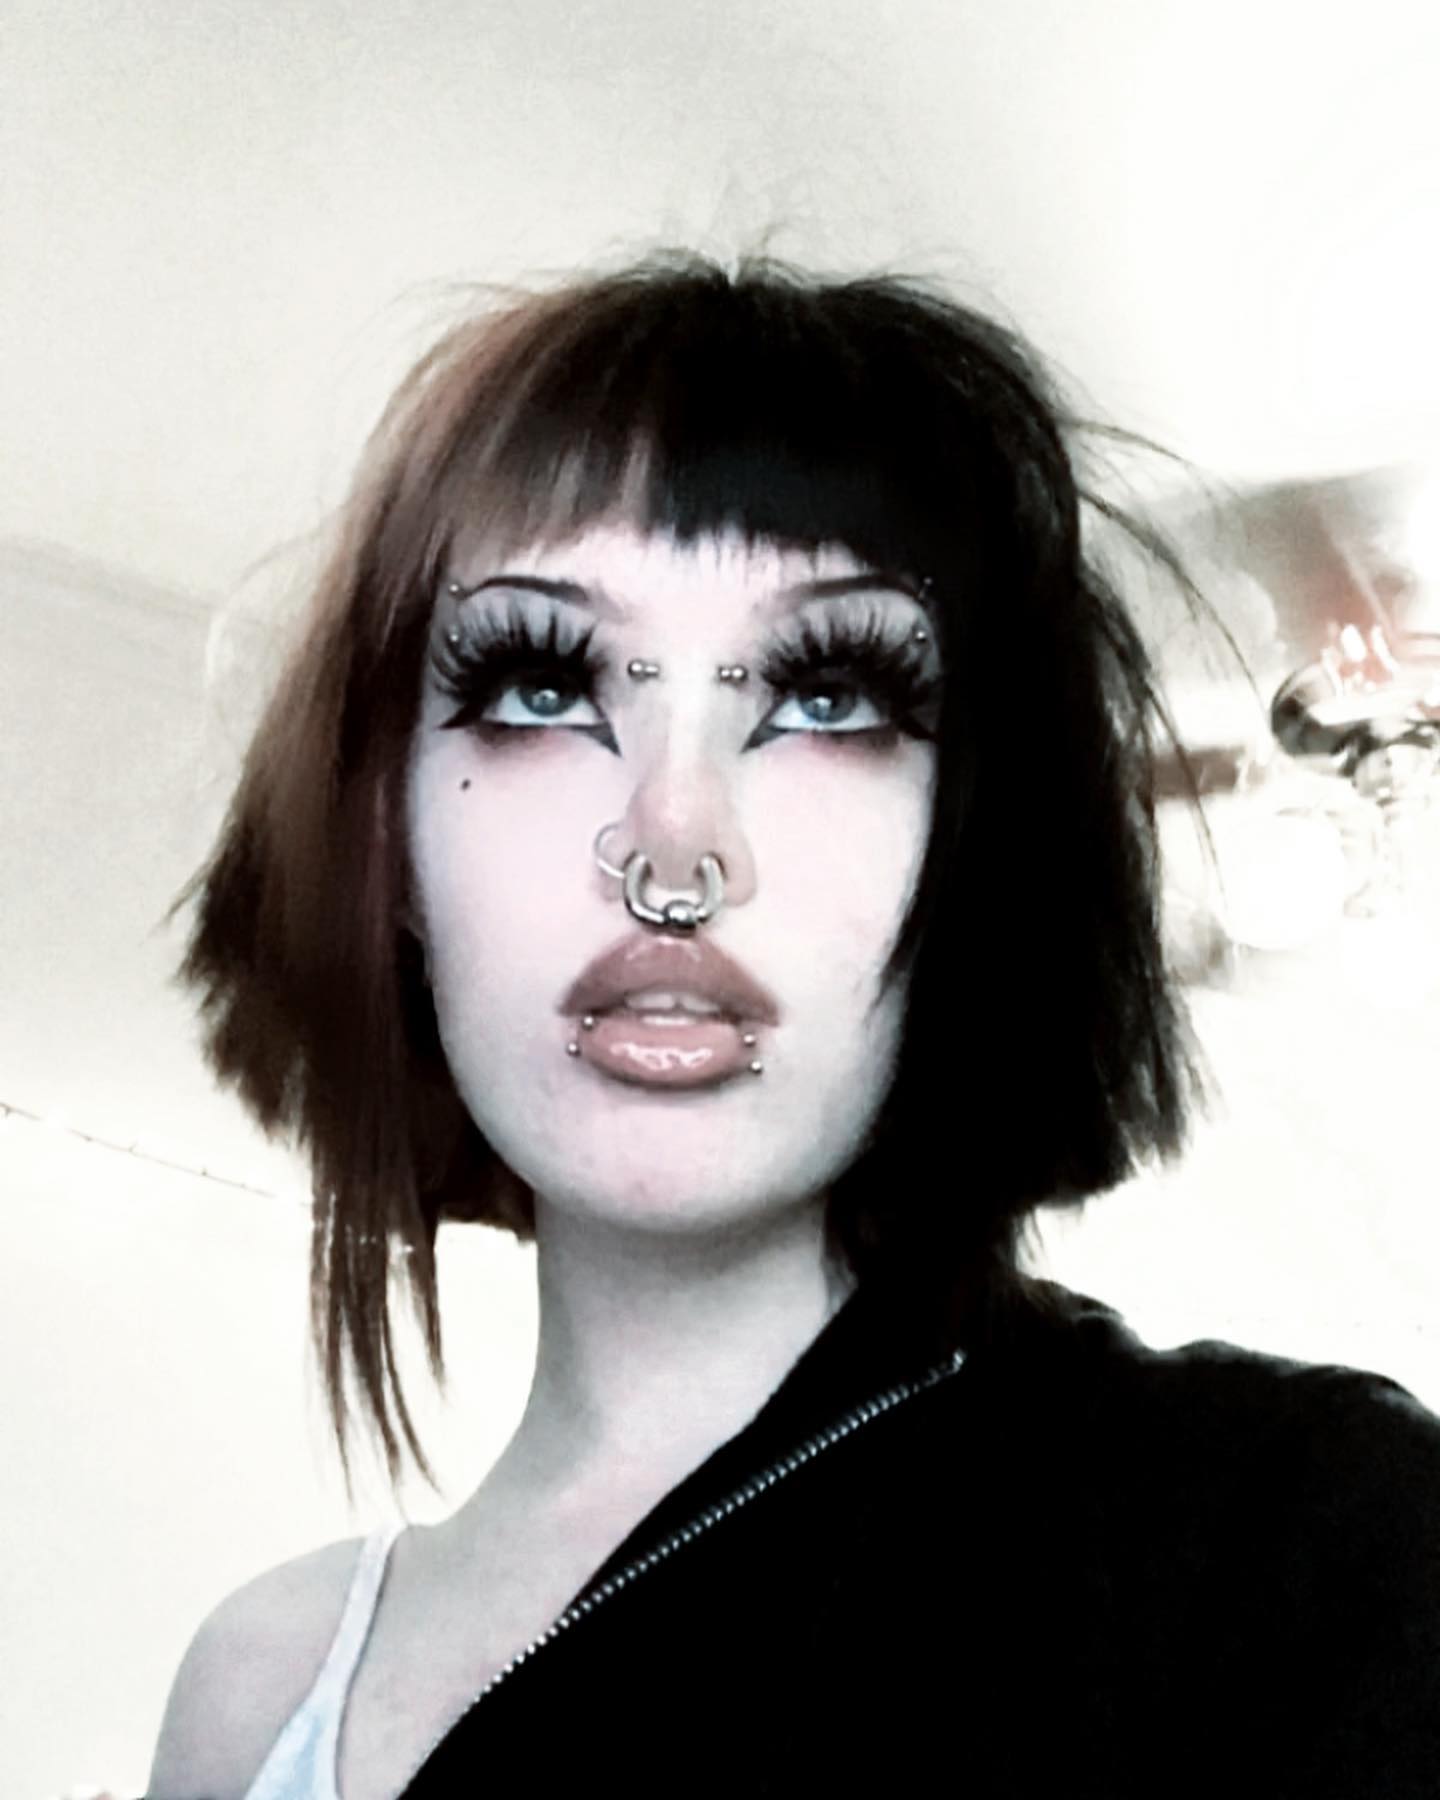 🐁
-
-
-
-
-
-
-
-
-
-
-
-
-
-
-
-
-
-
-
-
-
#alternative #alternativefashion #eyeliner #alternativestyle #alt #altgirl #altfashion #altgirls #gothgirl #goth #gothgoth #gothfashion #gothgirls #gothic #punk #emo #emogirl #foryoupage #piercings #hairdye #makeup #makeupinspo #fashion #darkfashion #darkhair #fashioninspo #metalgirl #metalhead #fyp #contentcreator